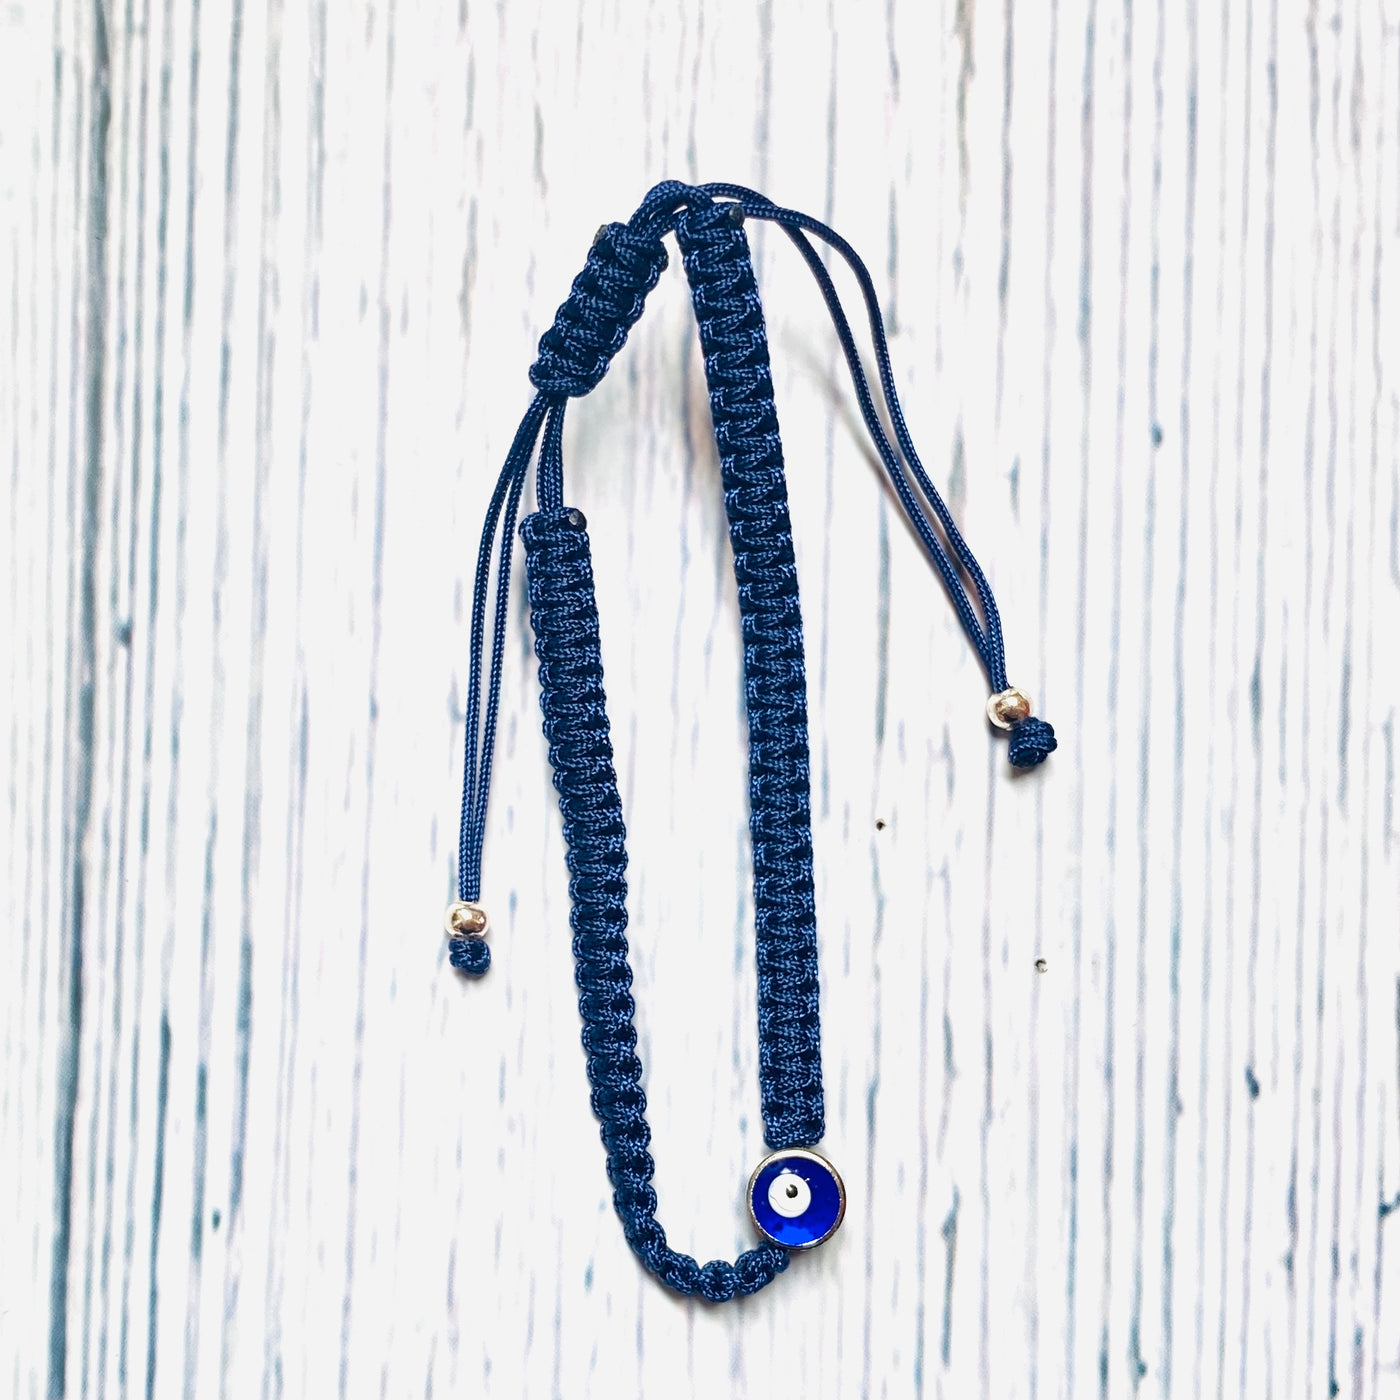 Blue braided string bracelet with evil eye charm.